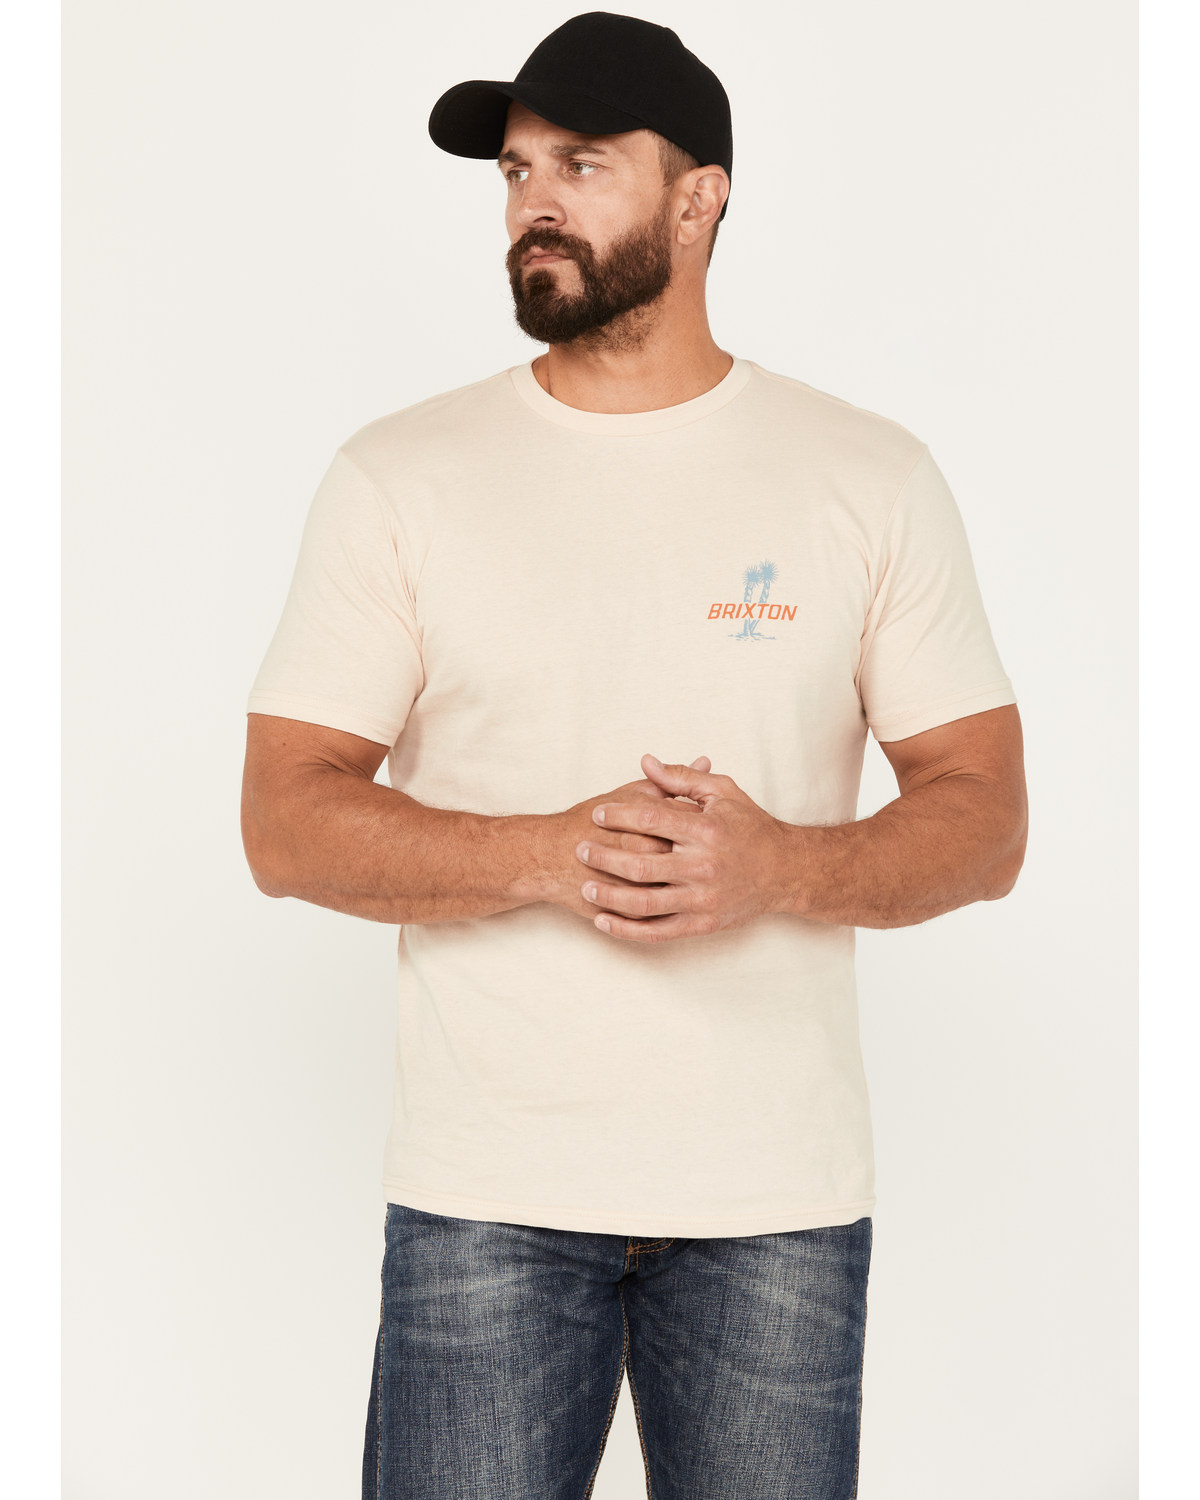 Brixton Men's Austin Cowboy Short Sleeve Graphic T-Shirt